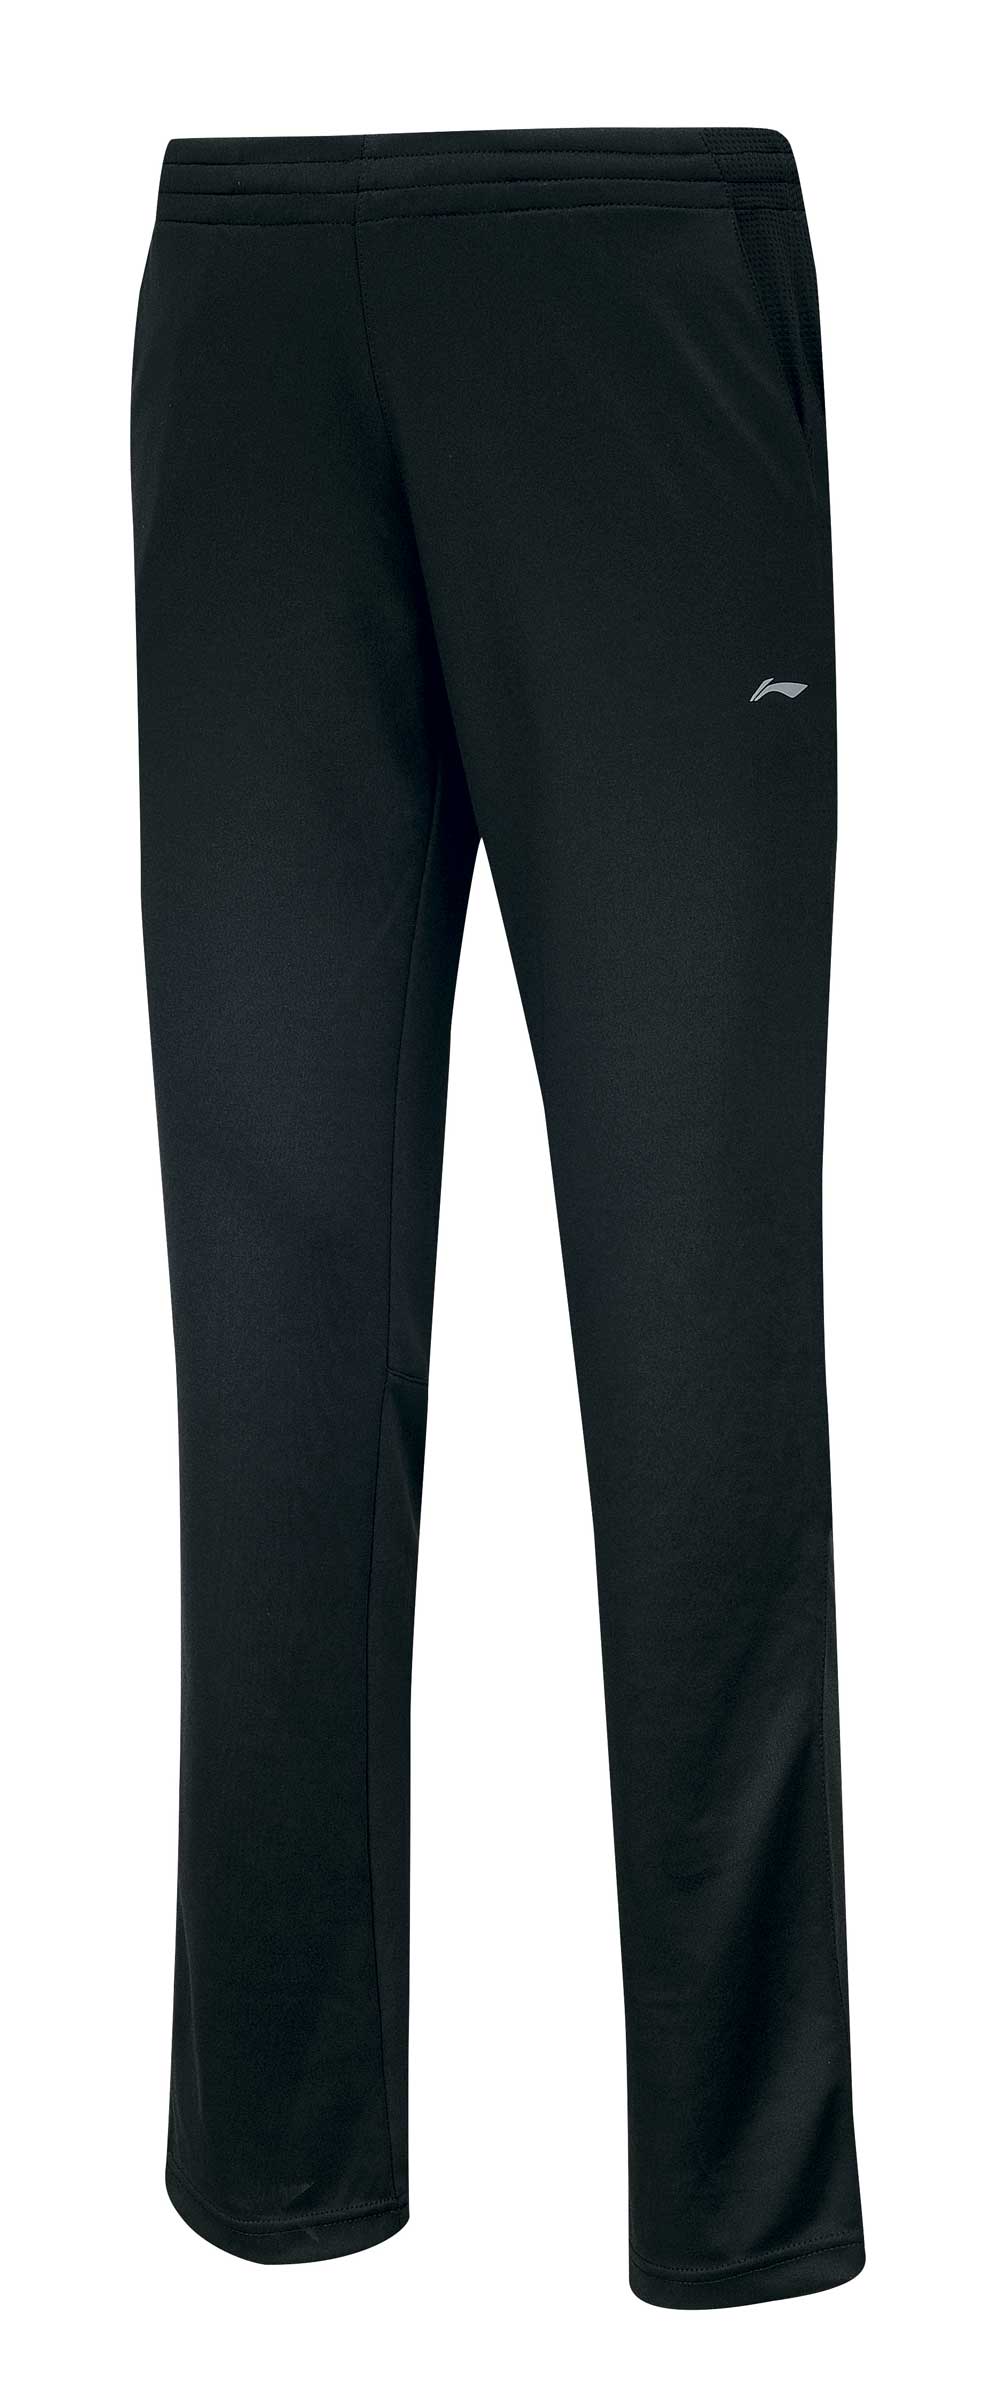 Спортивные штаны LI-NING AKLK172-2 (размер: S, M). 